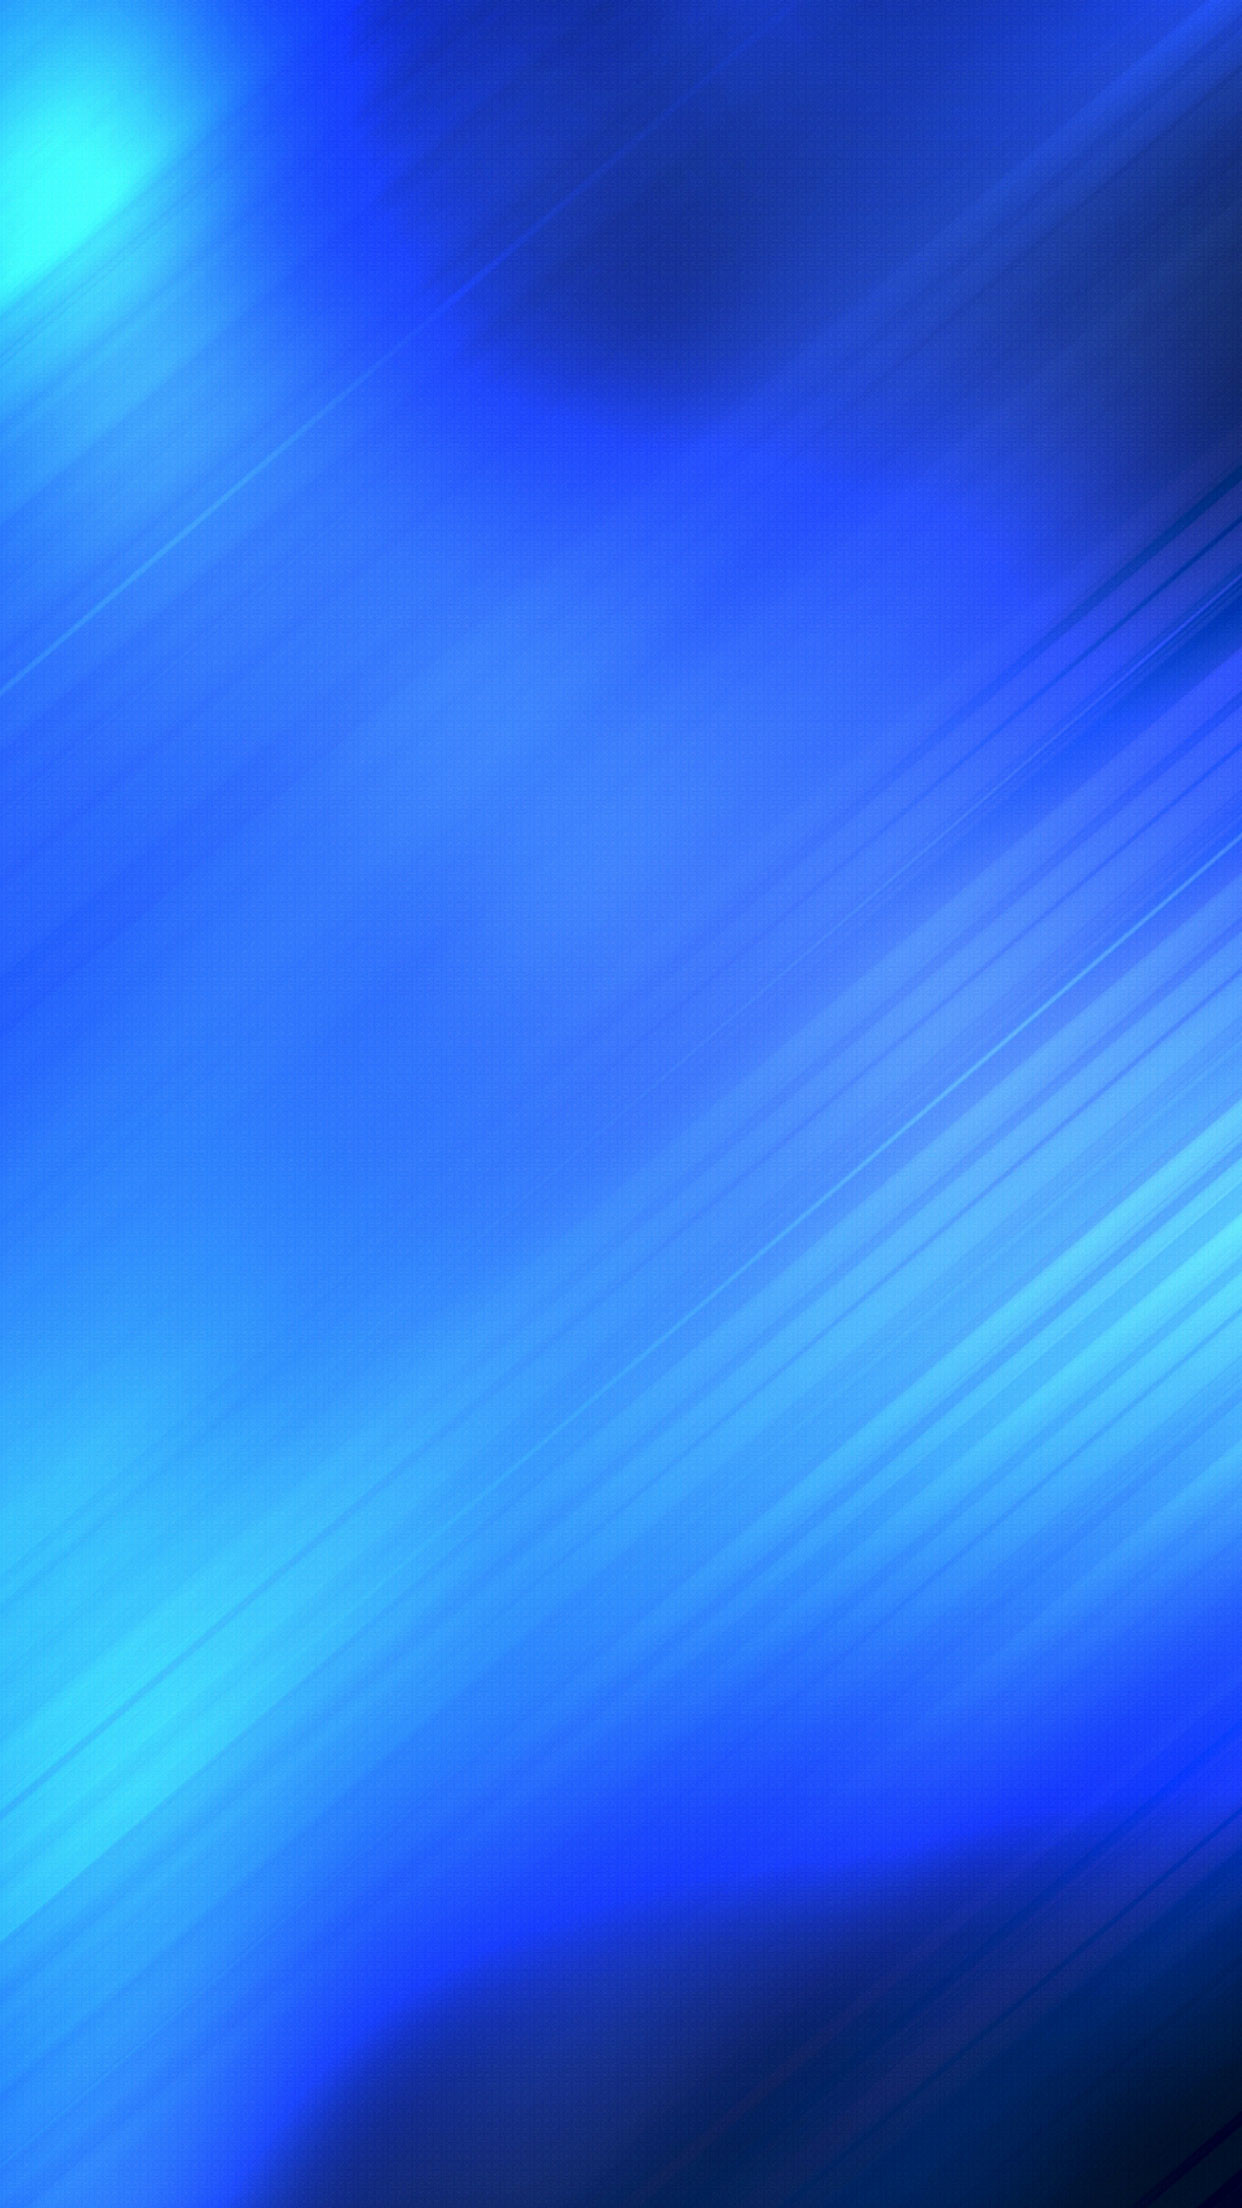 fond d'écran abstrait bleu,bleu,ciel,bleu cobalt,bleu électrique,jour